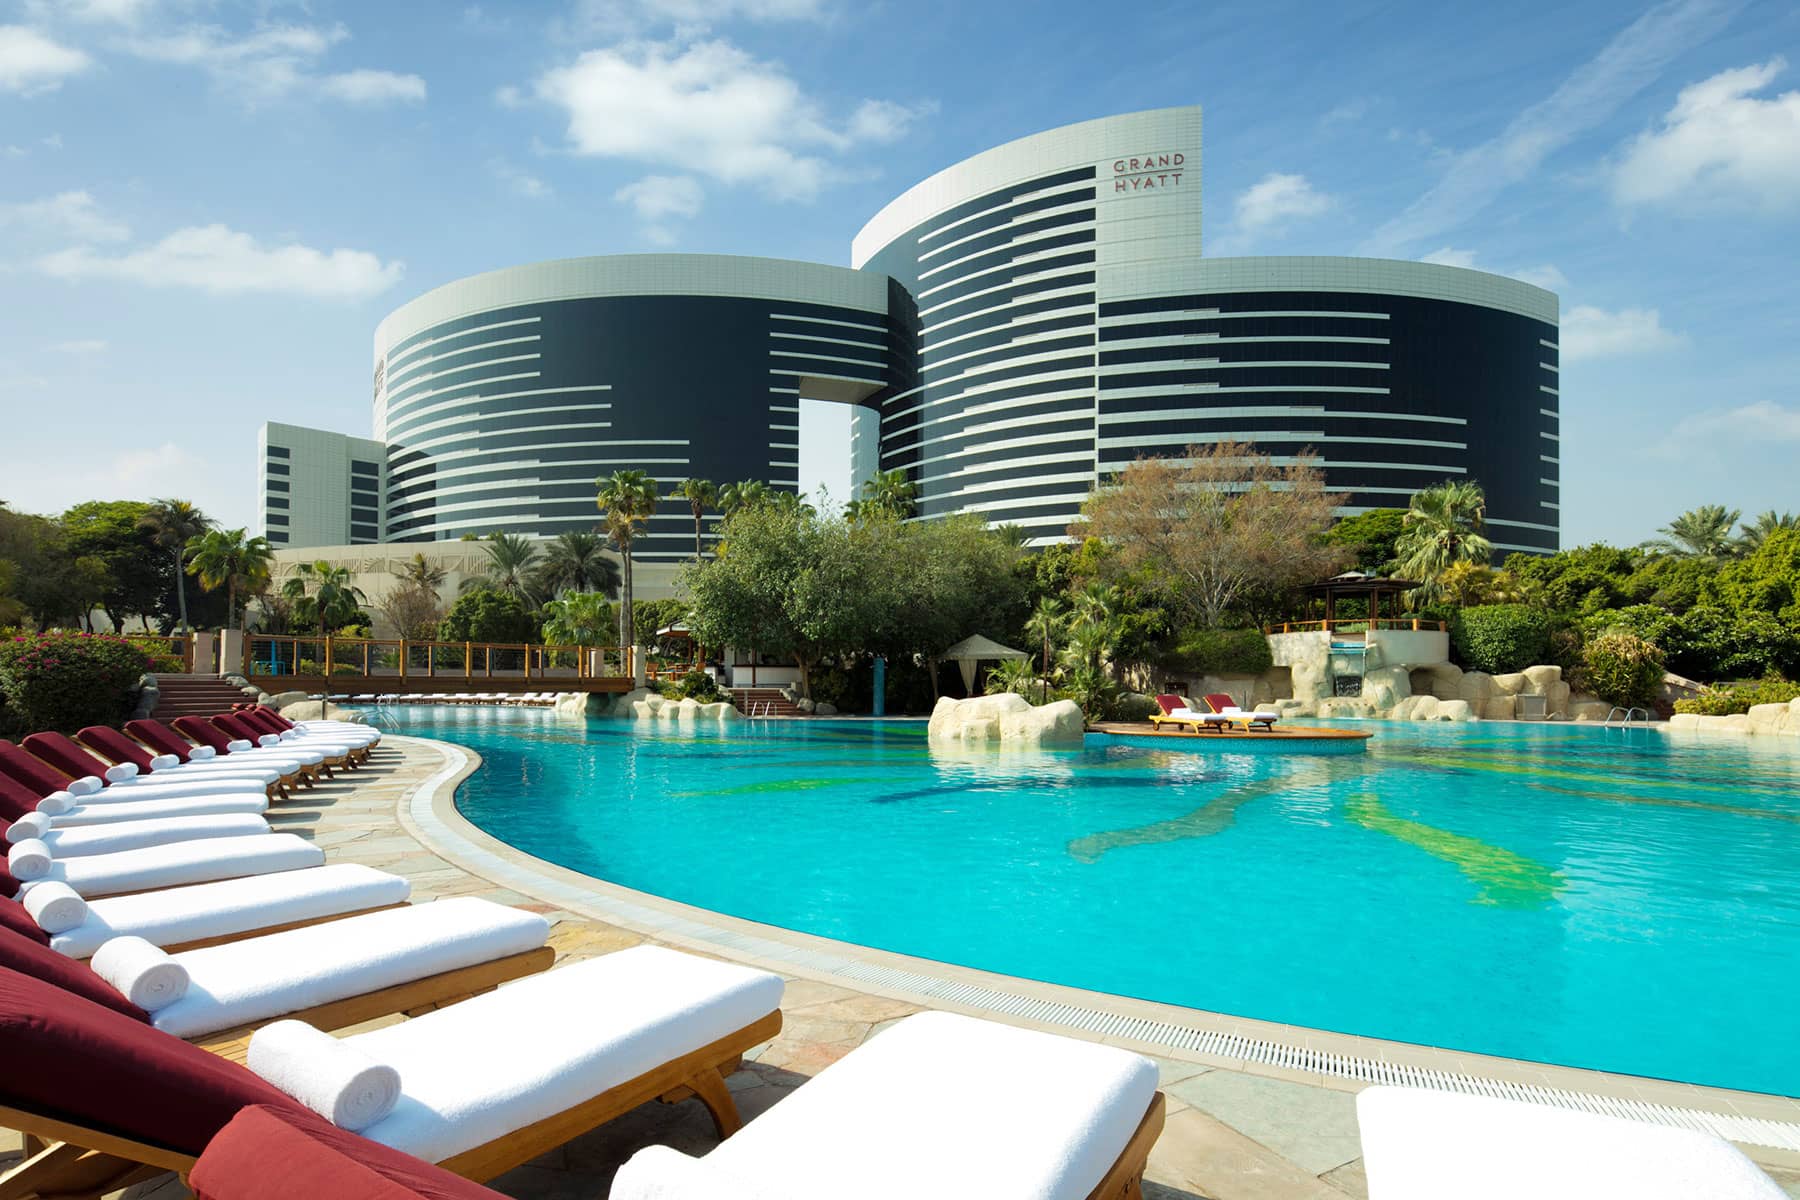 Hotel & Resort Photography Dubai: Grand Hyatt Dubai